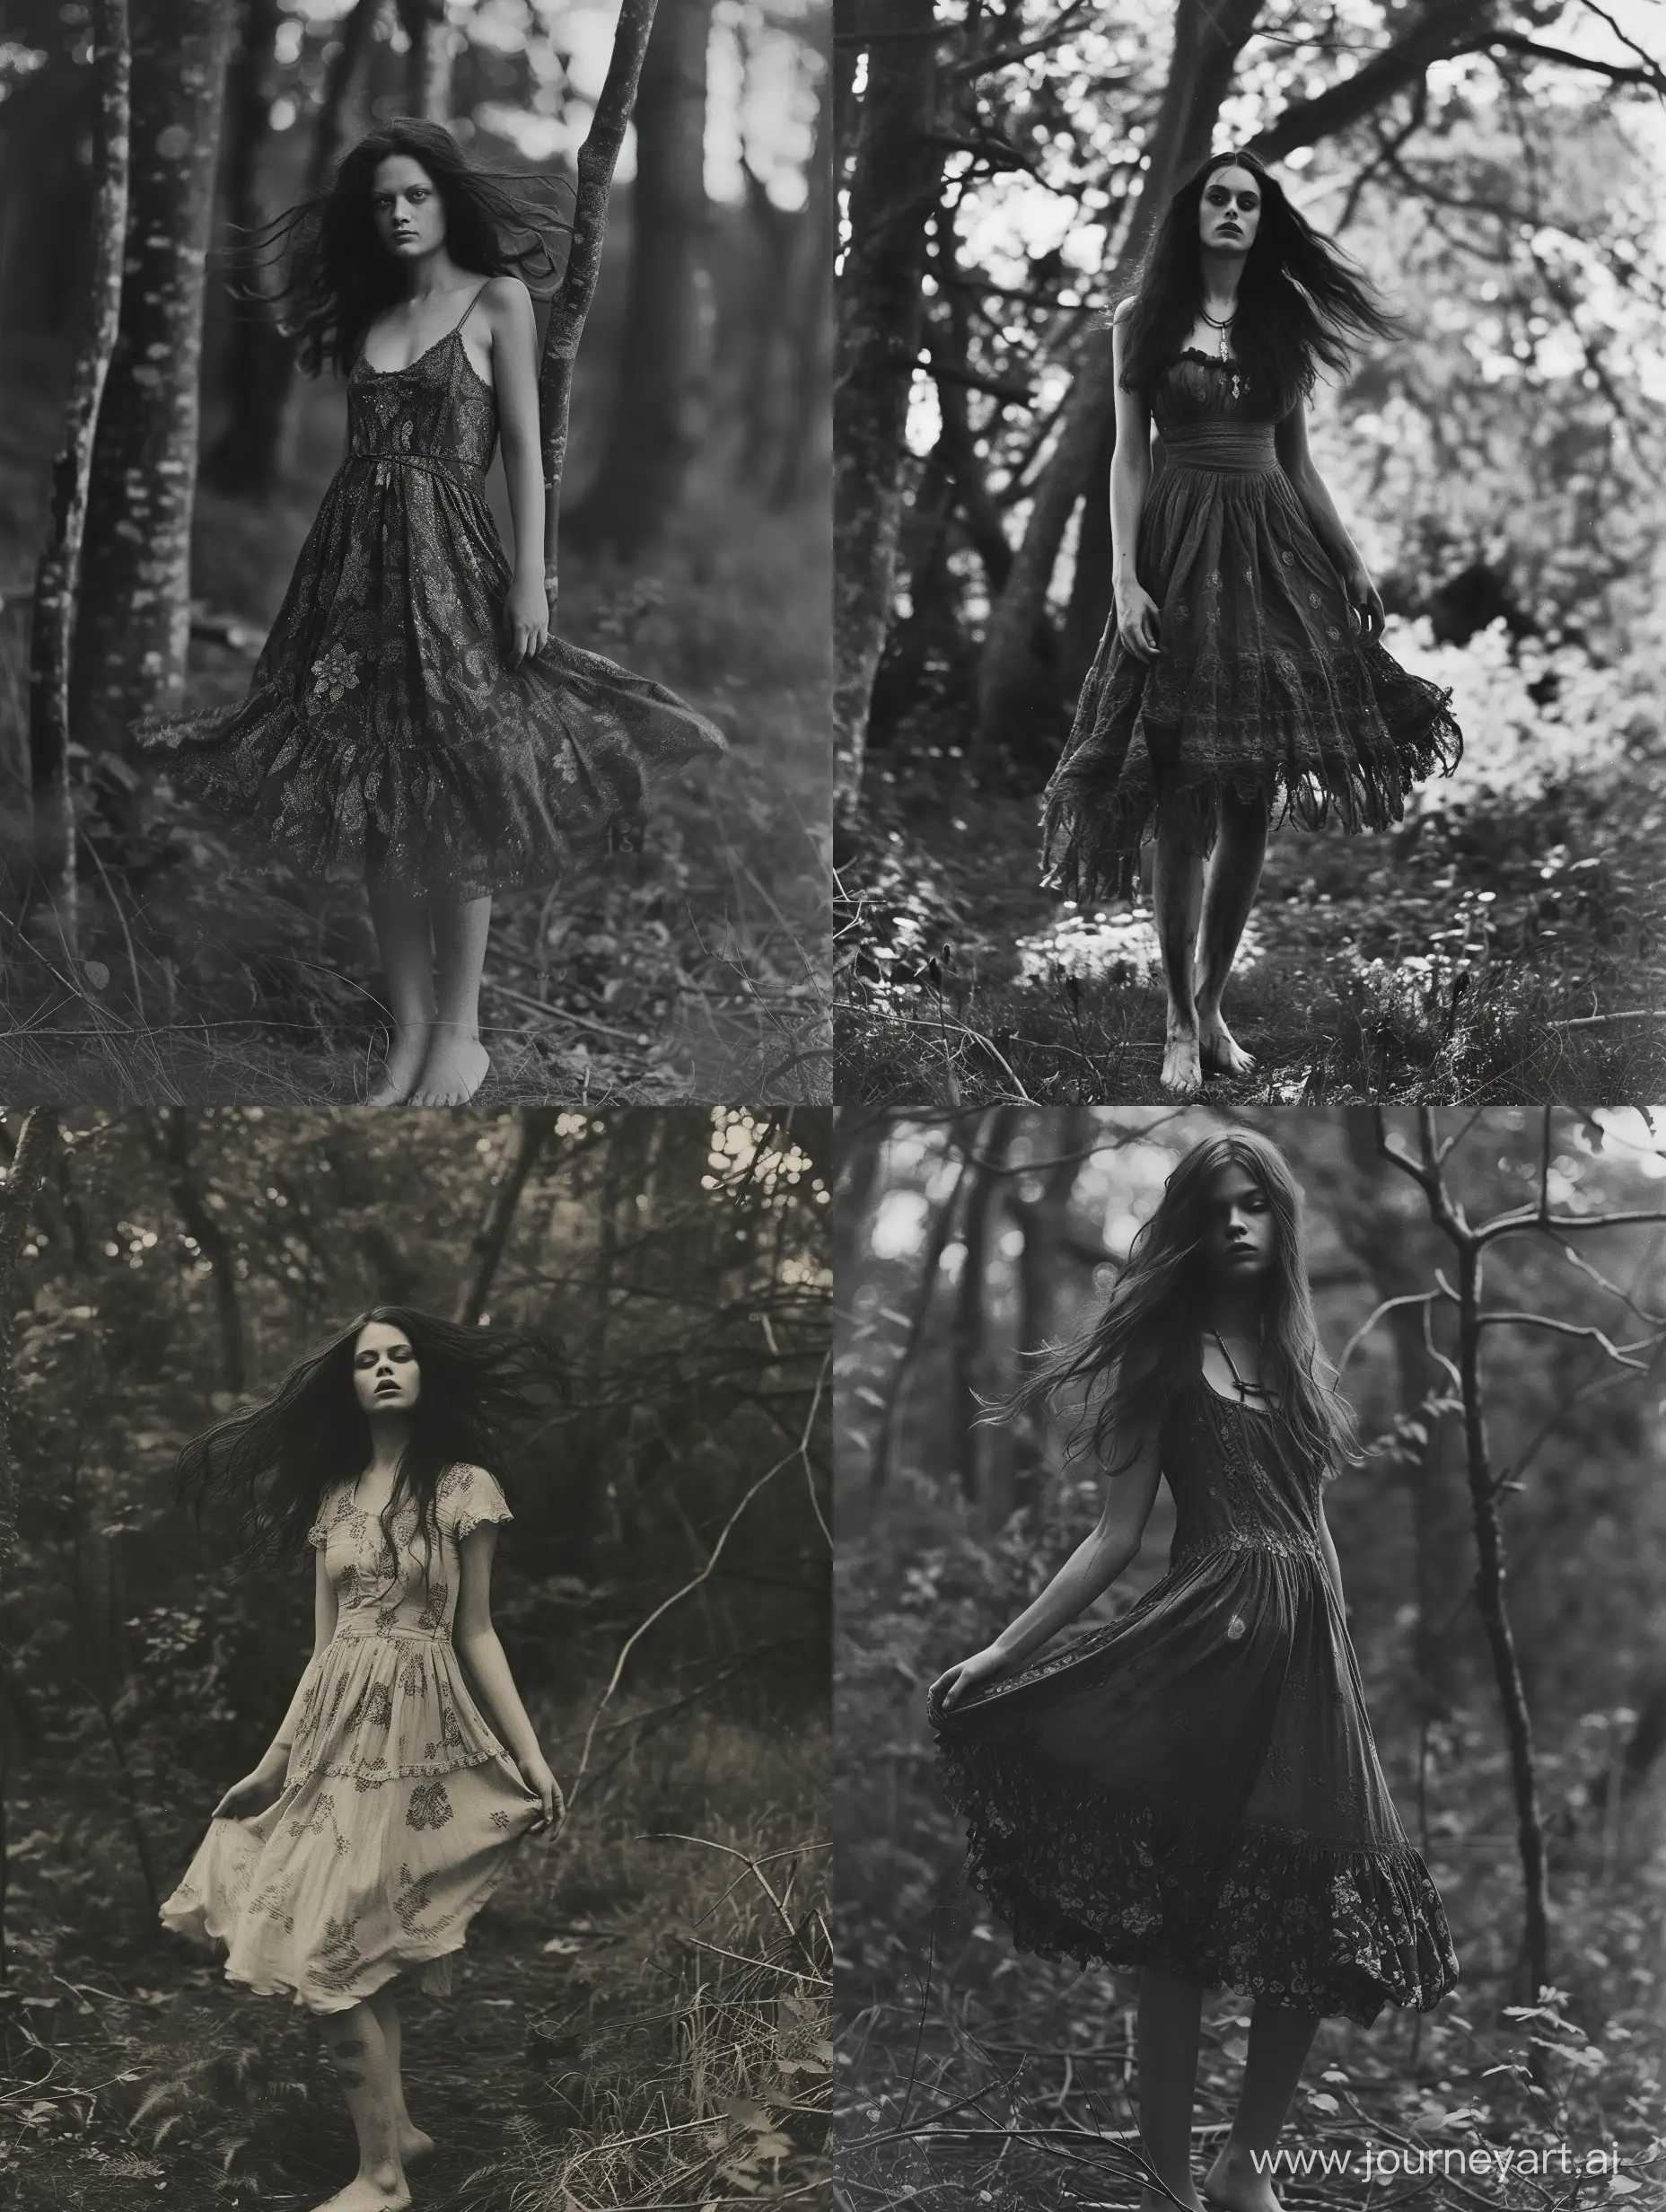 Mystical-Pagan-Woman-in-Creepy-Ethereal-Dress-Dark-Aesthetic-Folk-Horror